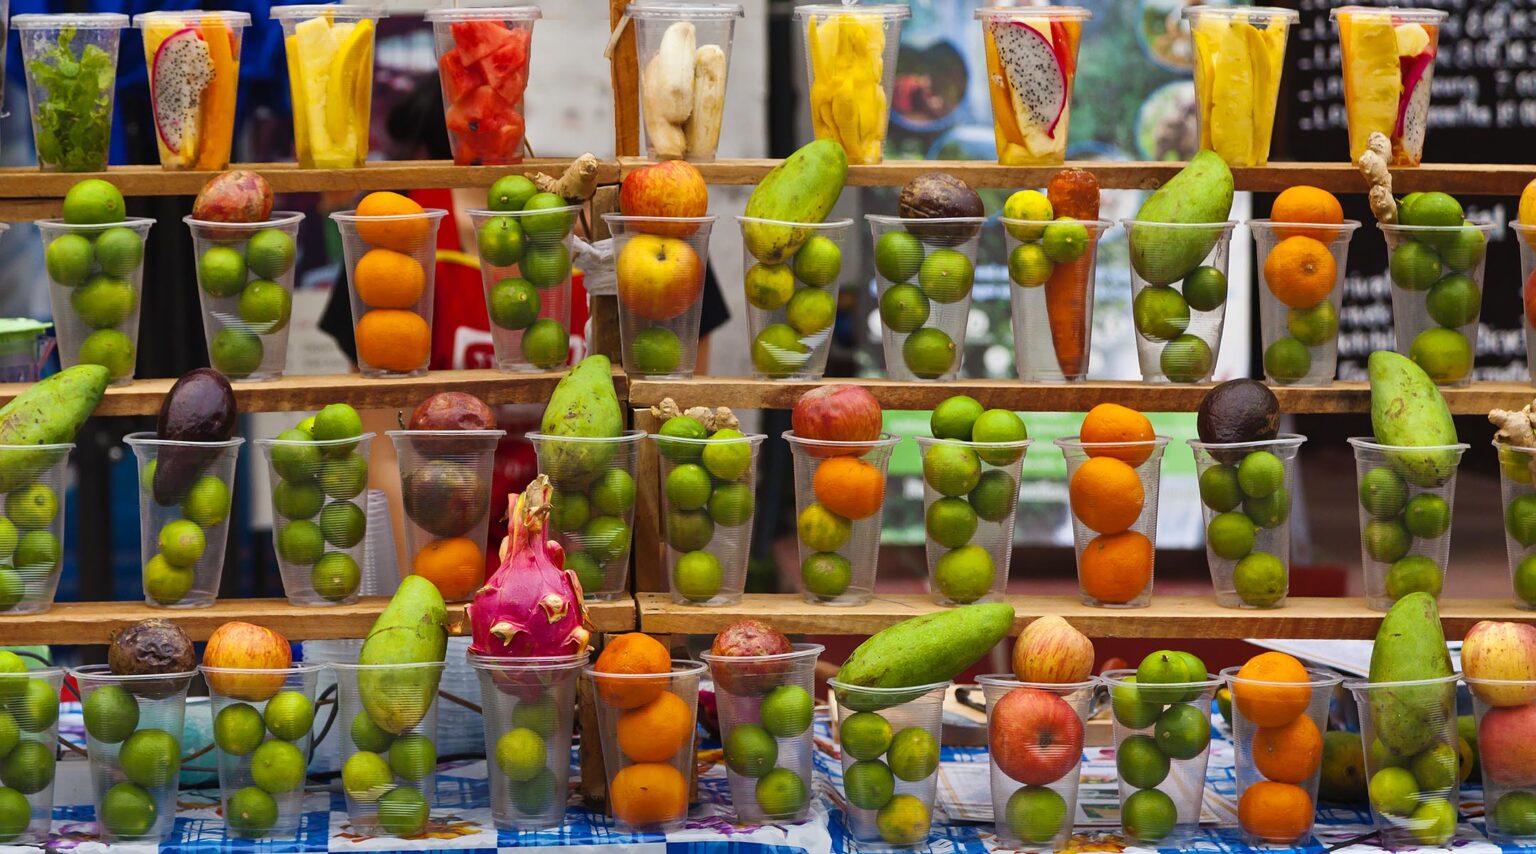 Fresh fruit for sale including mango, oranges, apples, pineapple, watermelon and banana - LUANG PRABANG, LAOS